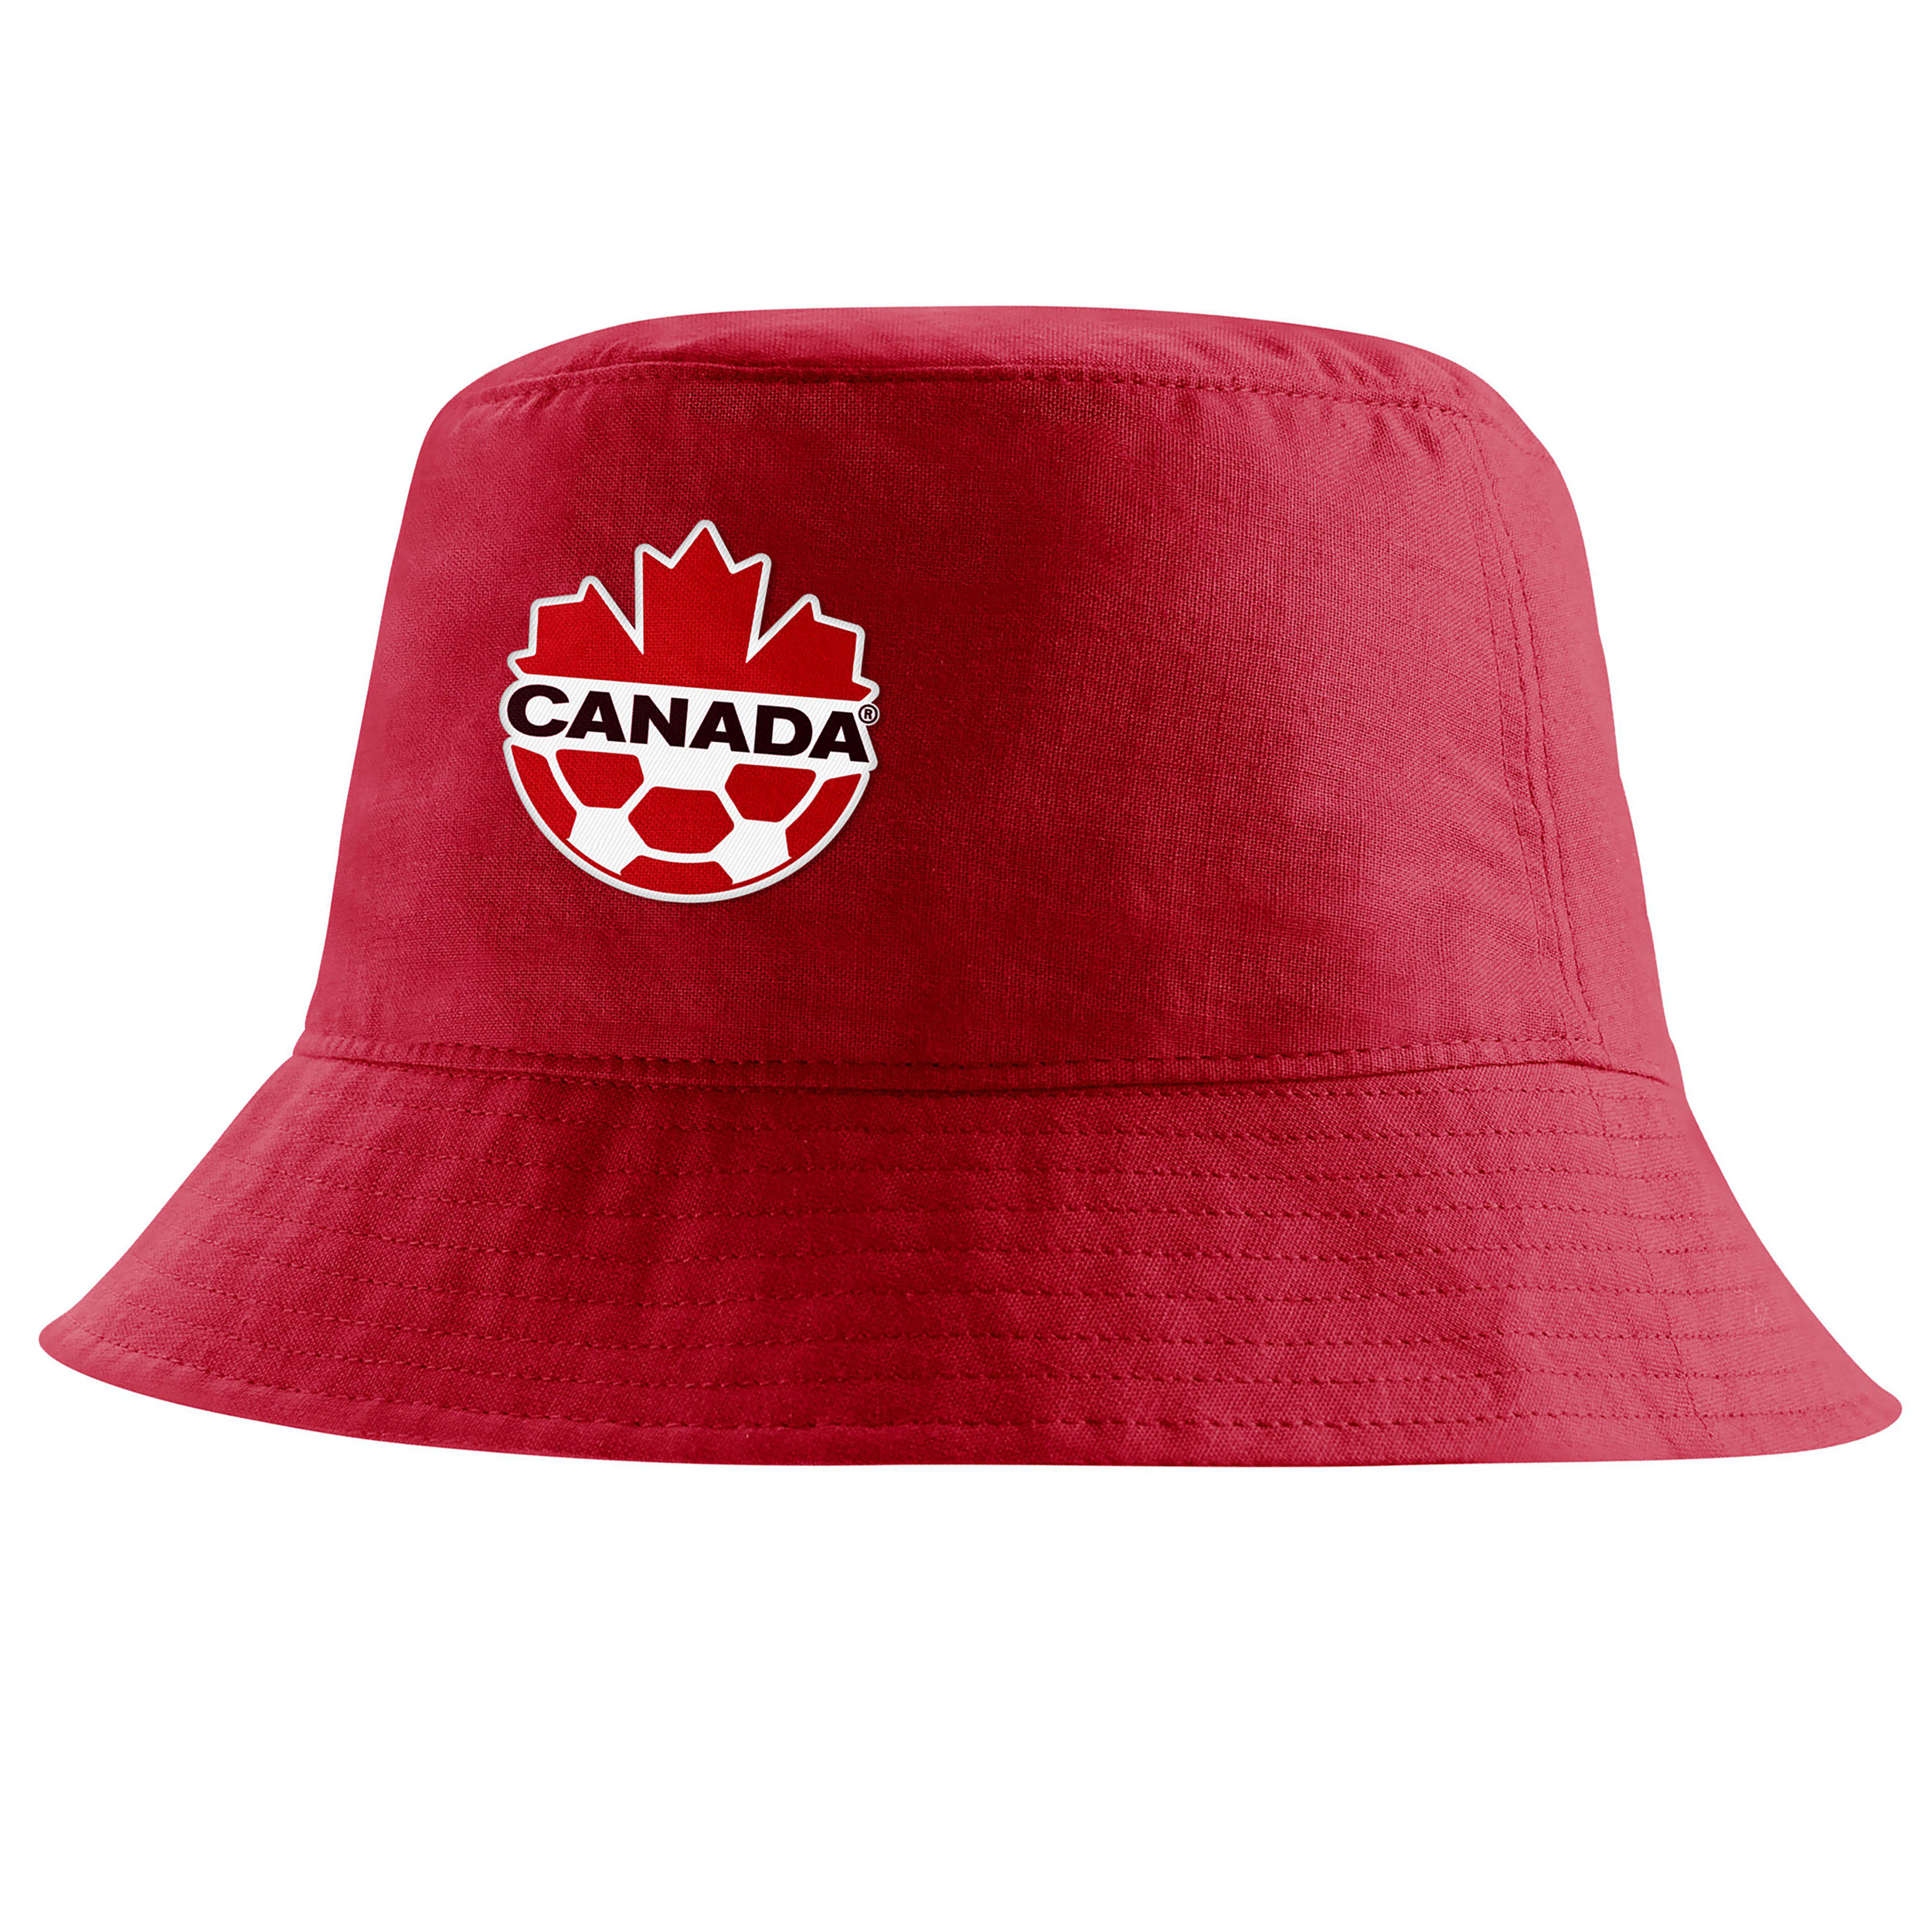 NIKE UNISEX CANADA BUCKET HAT,1013555497